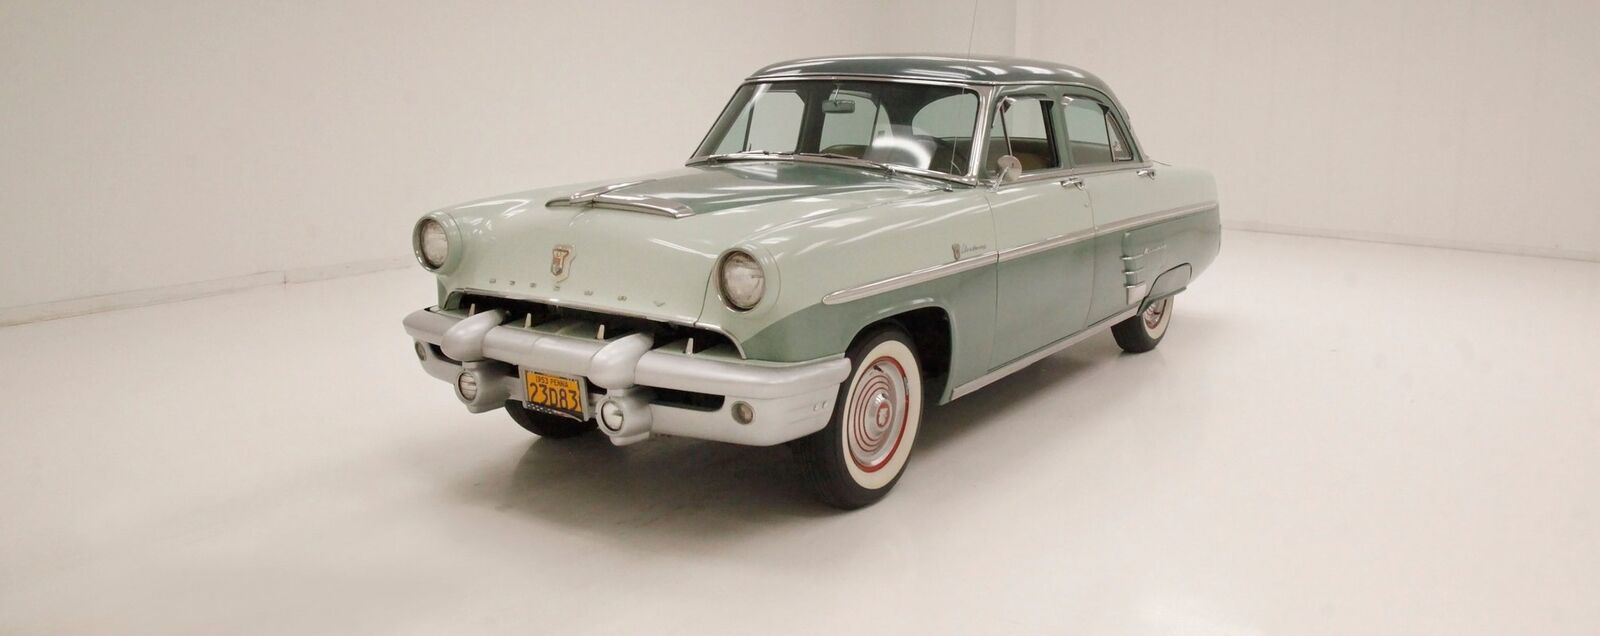 Mercury Monterey Berline 1953 à vendre